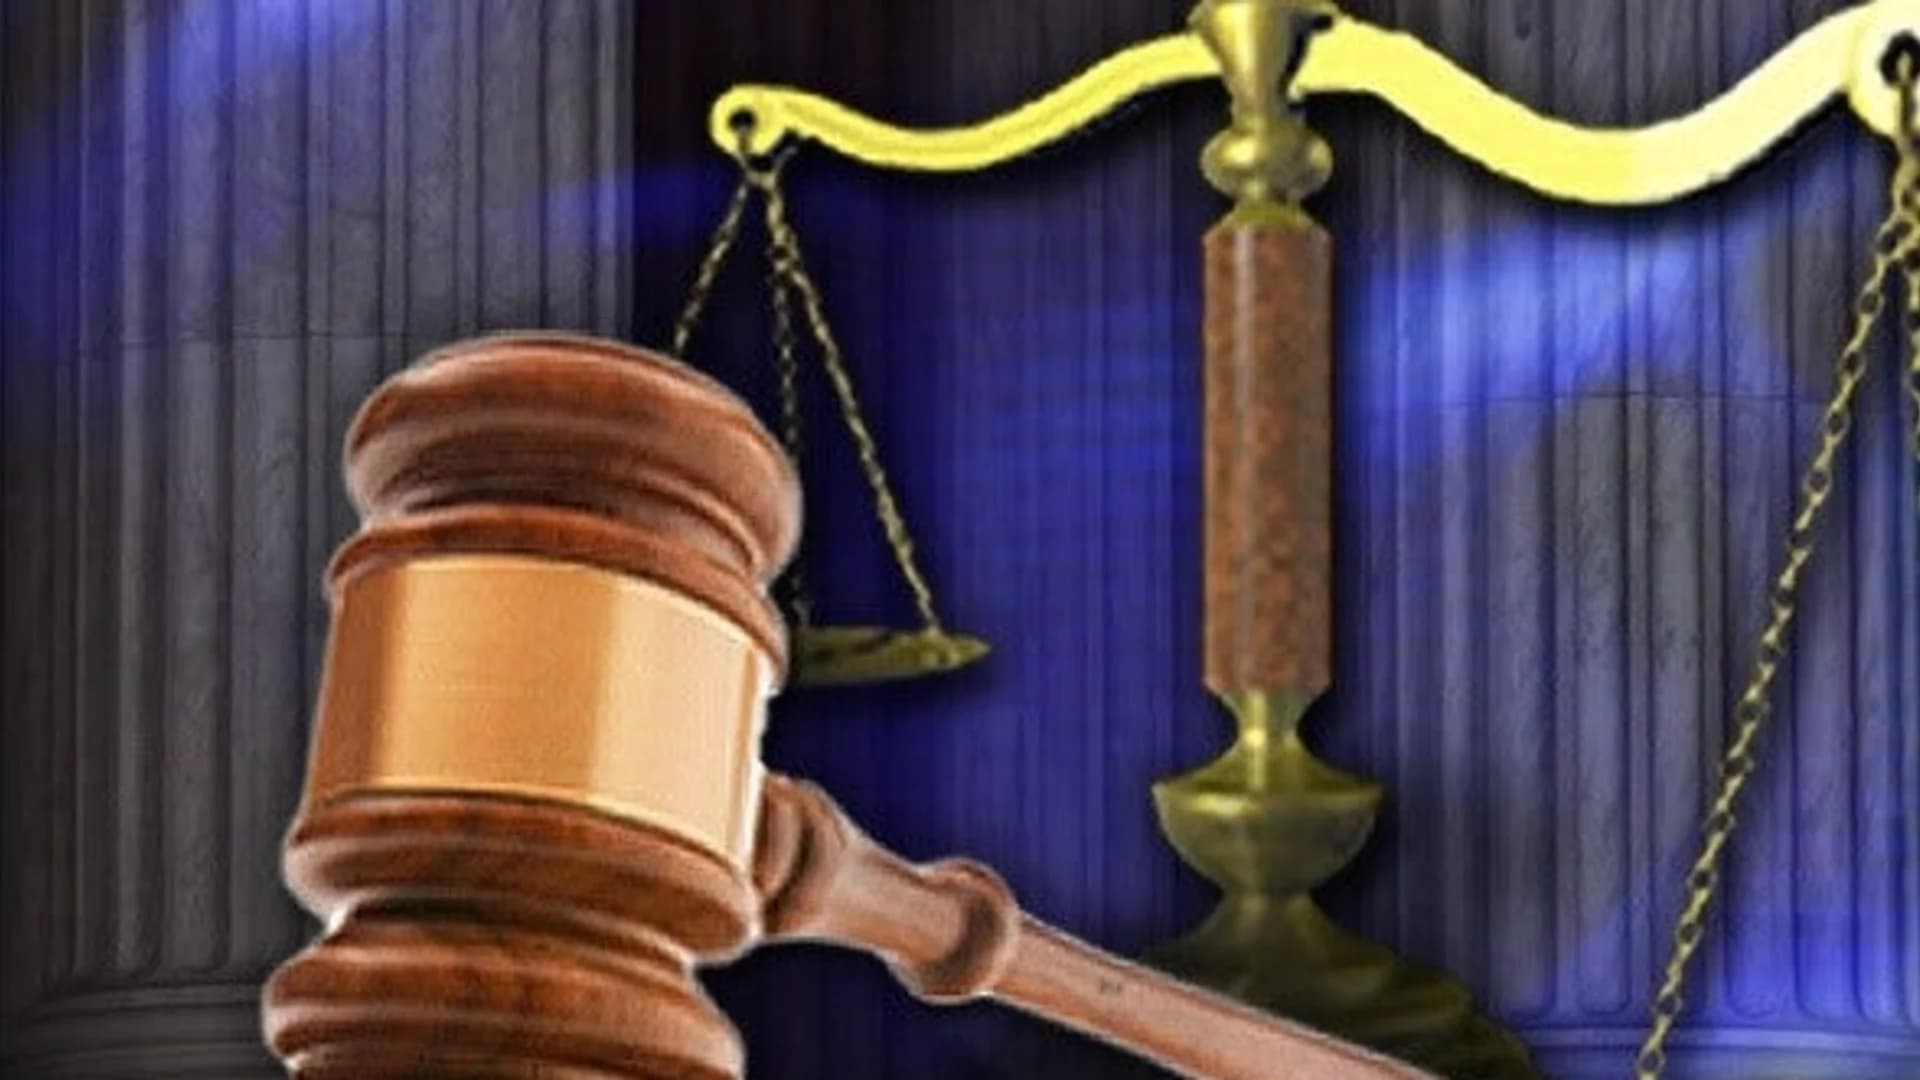 Case dismissed against man accused of murdering woman